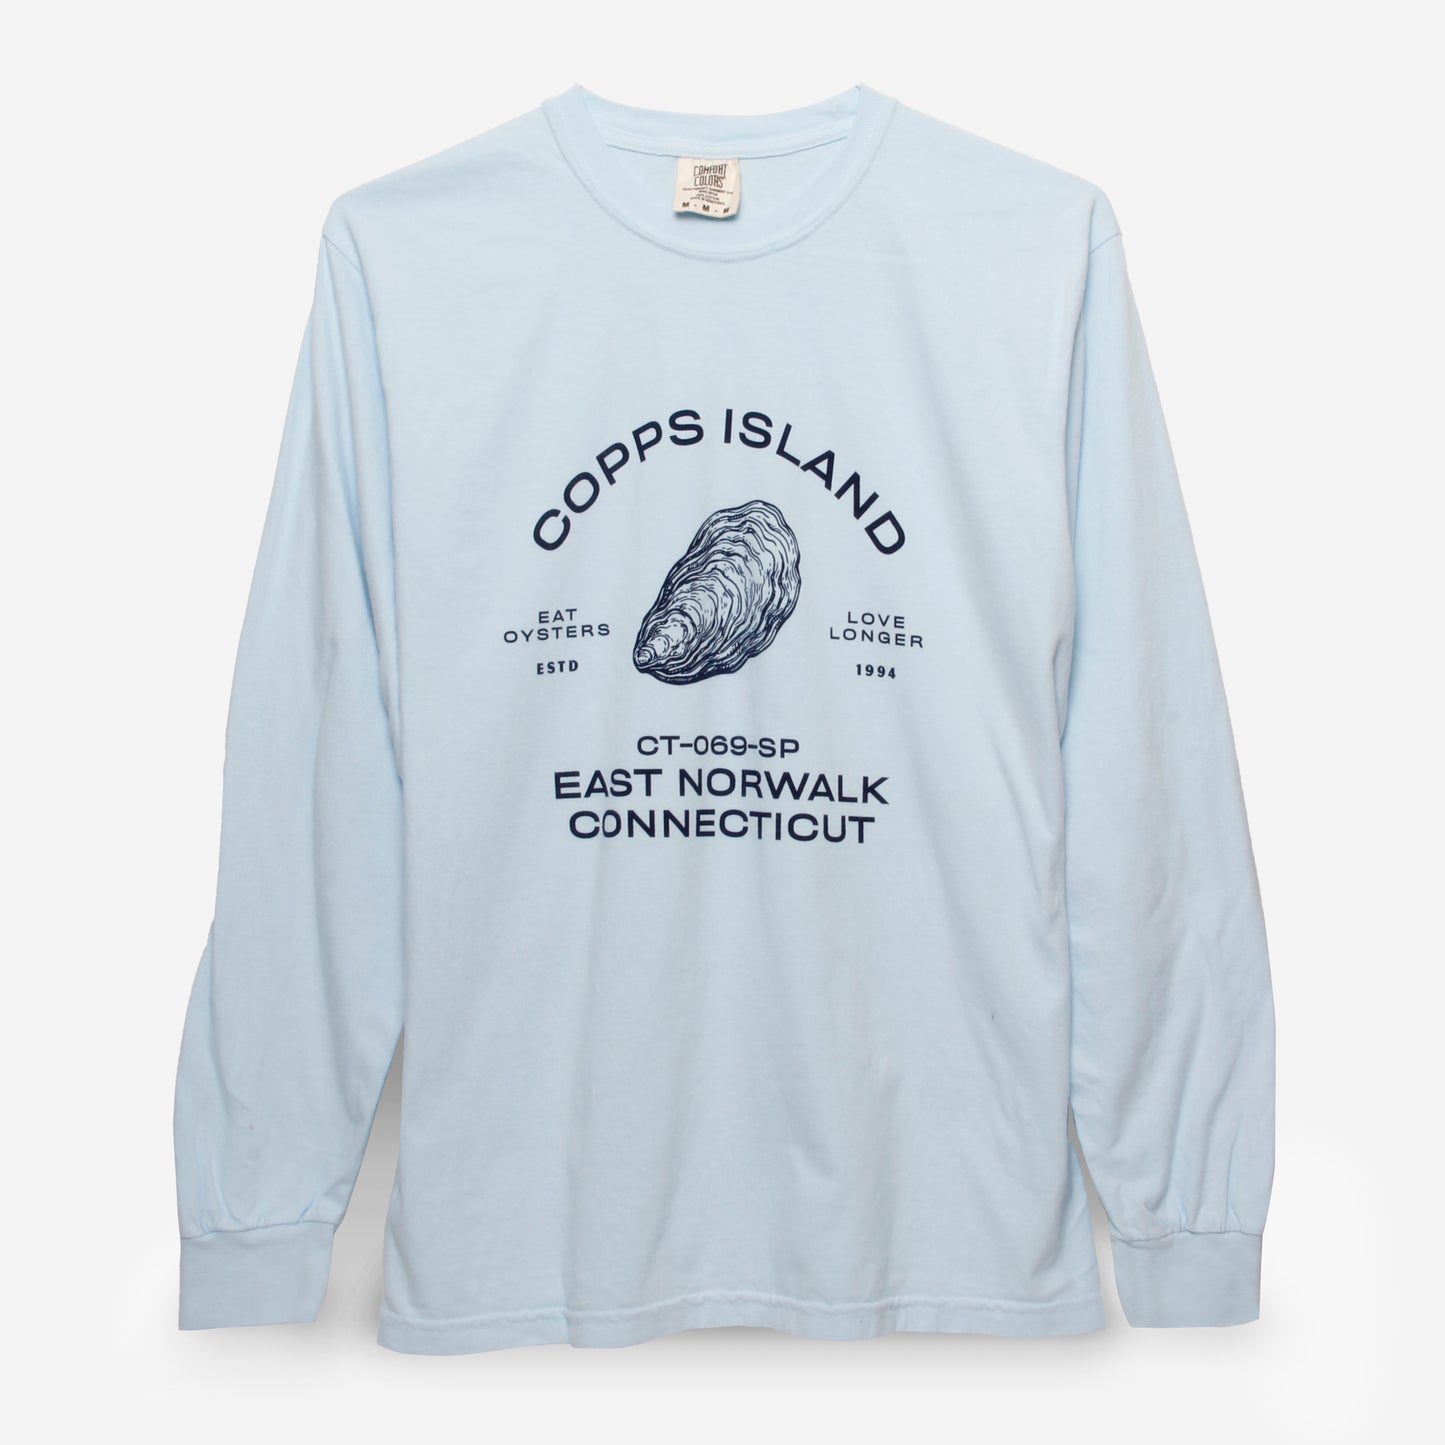 Copps Island Long Sleeve Shirt